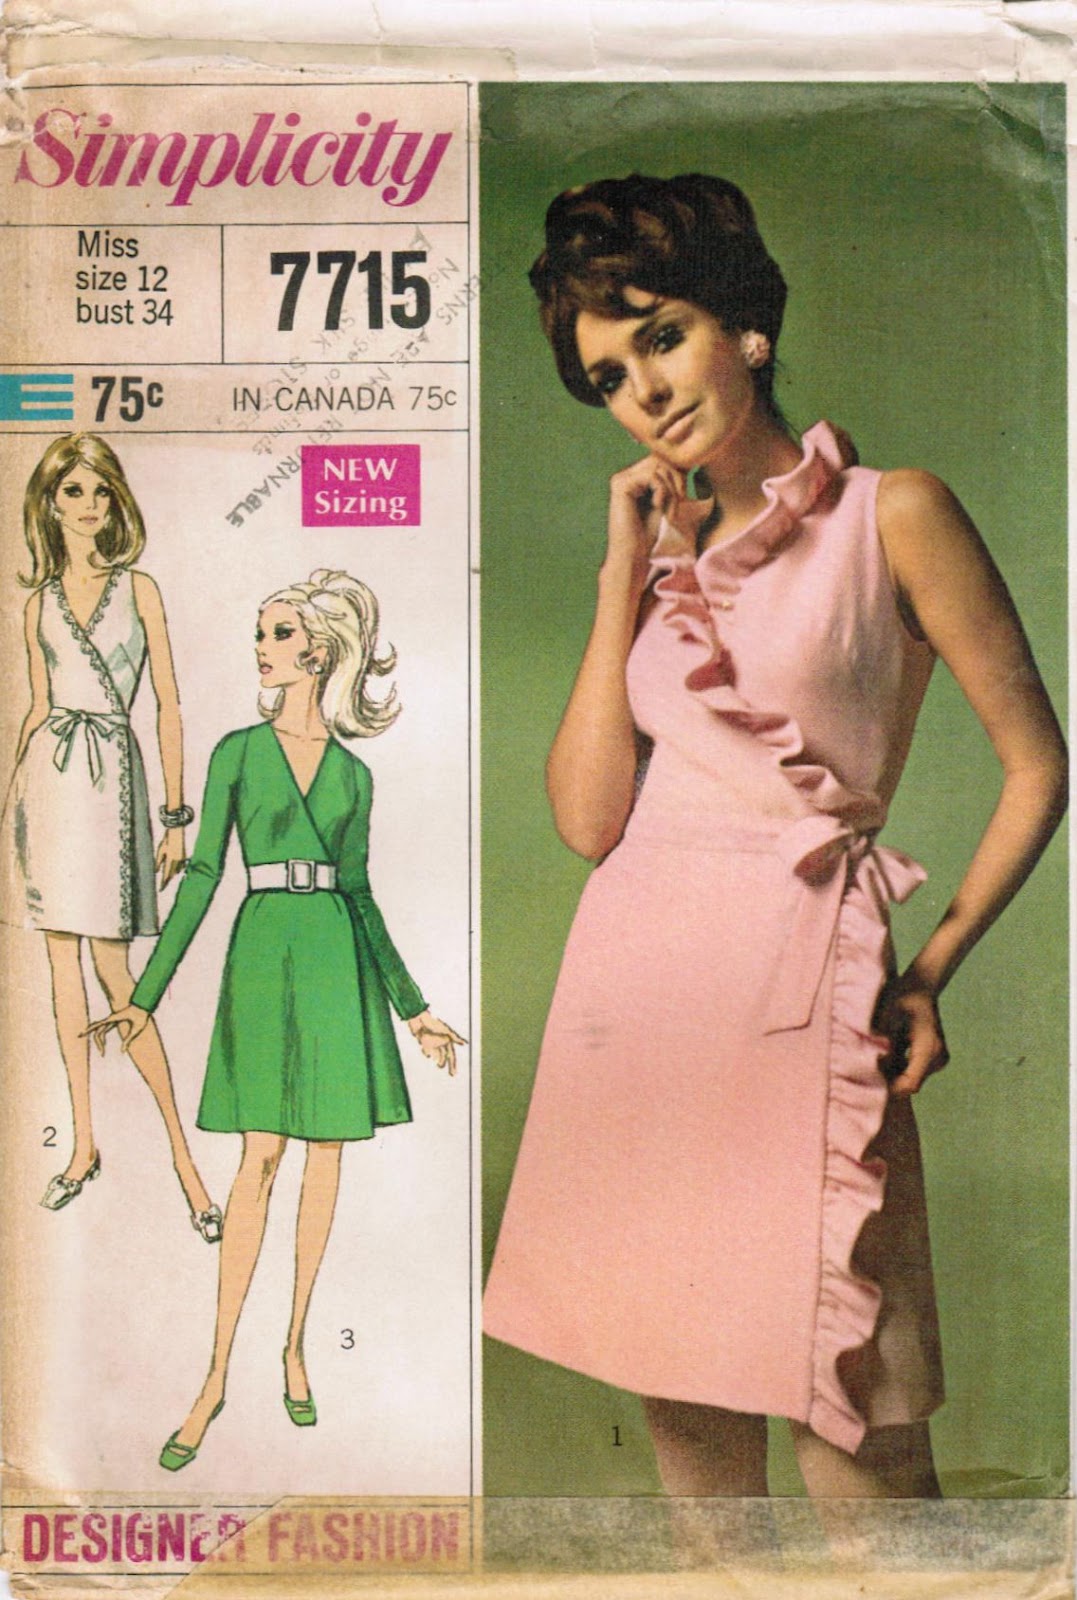 Style - 60s Mod A-Line Wrap Dress